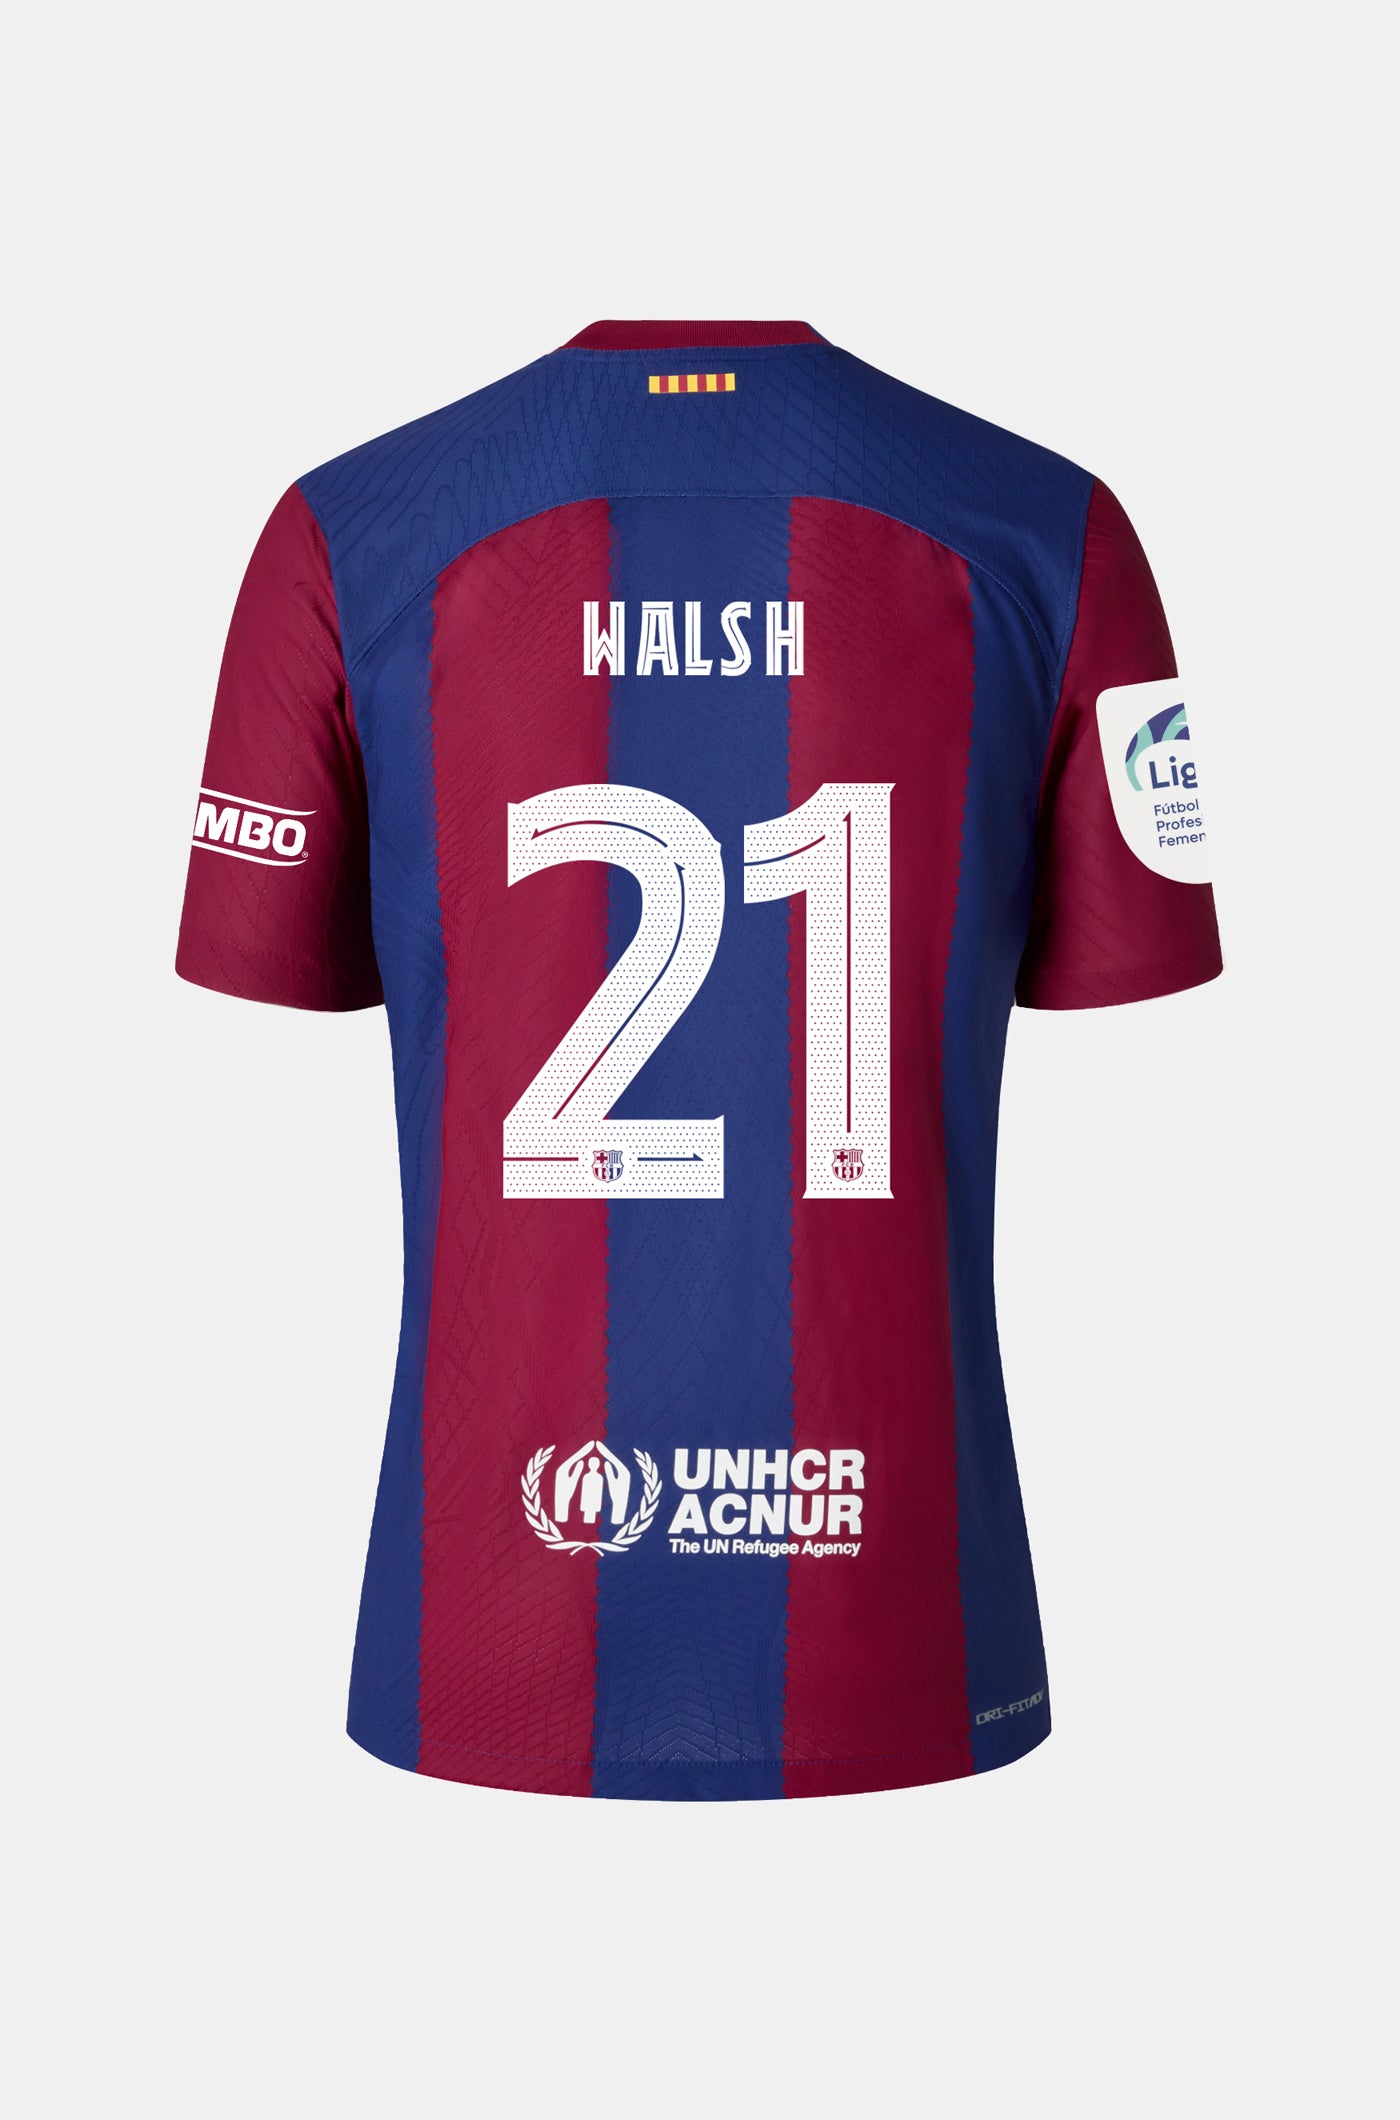 Liga F FC Barcelona Home Shirt 23/24 Player's Edition - Women - WALSH